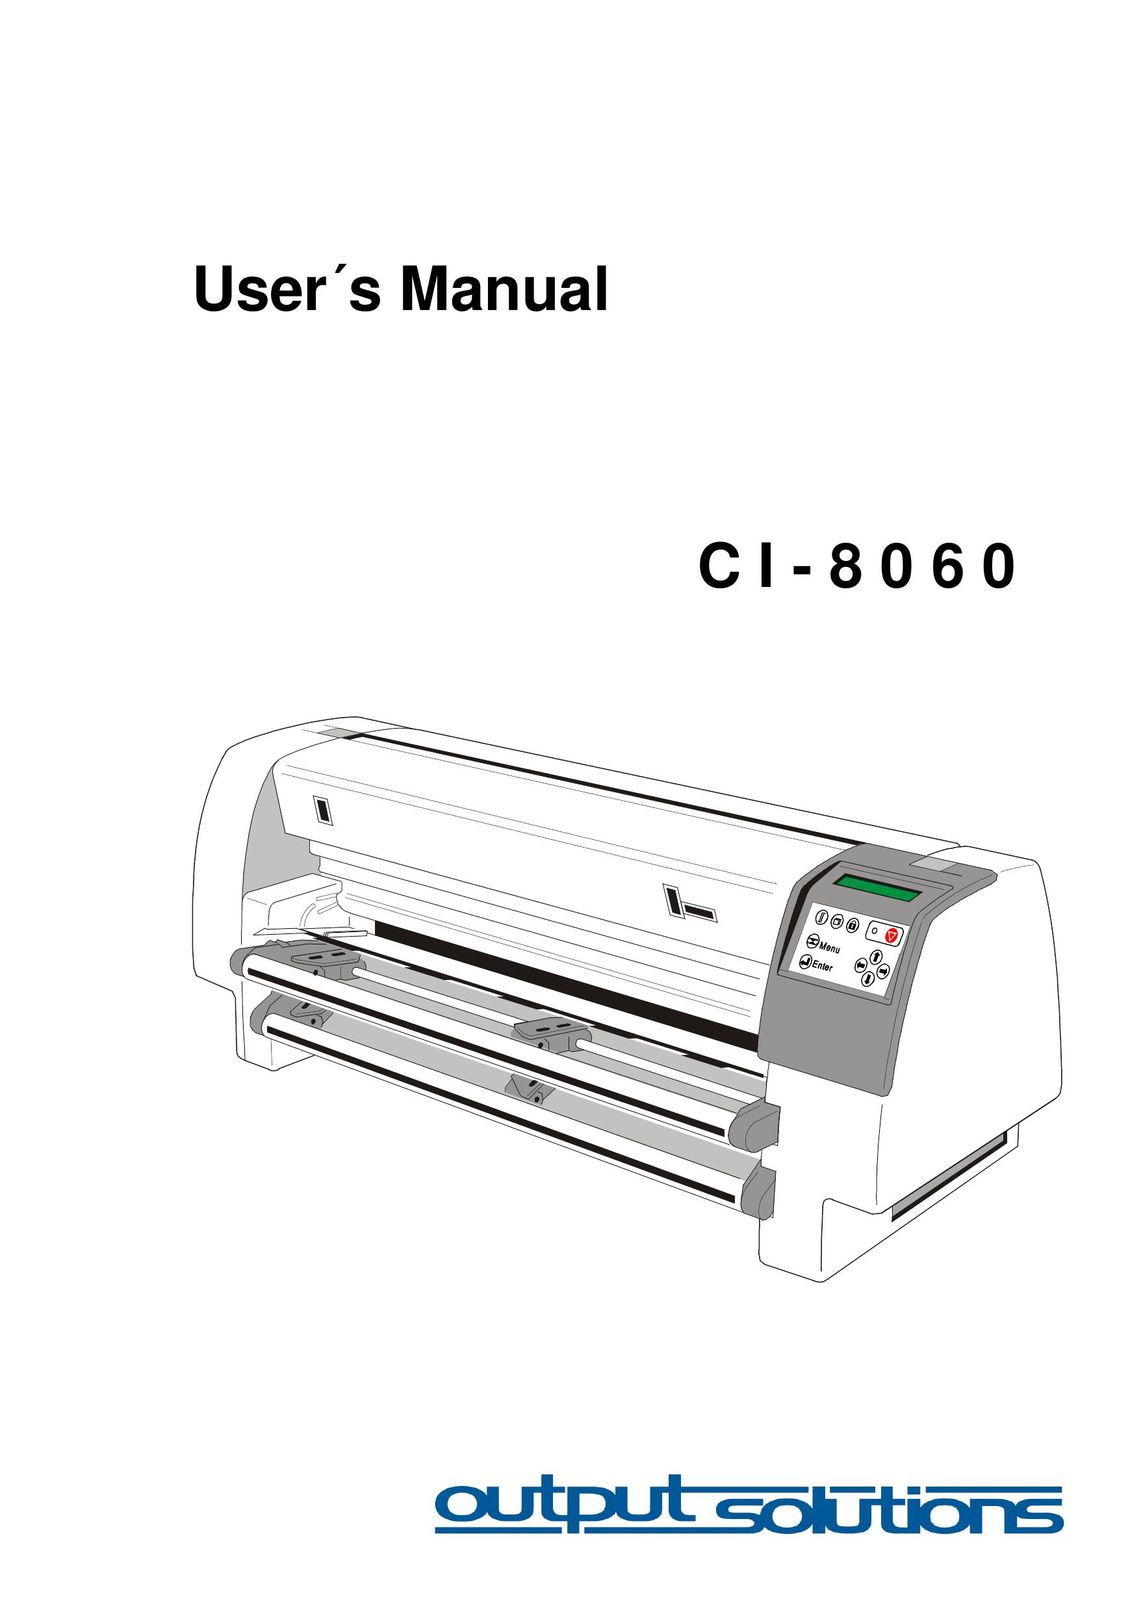 Output Solutions C I - 8 0 6 0 Printer User Manual